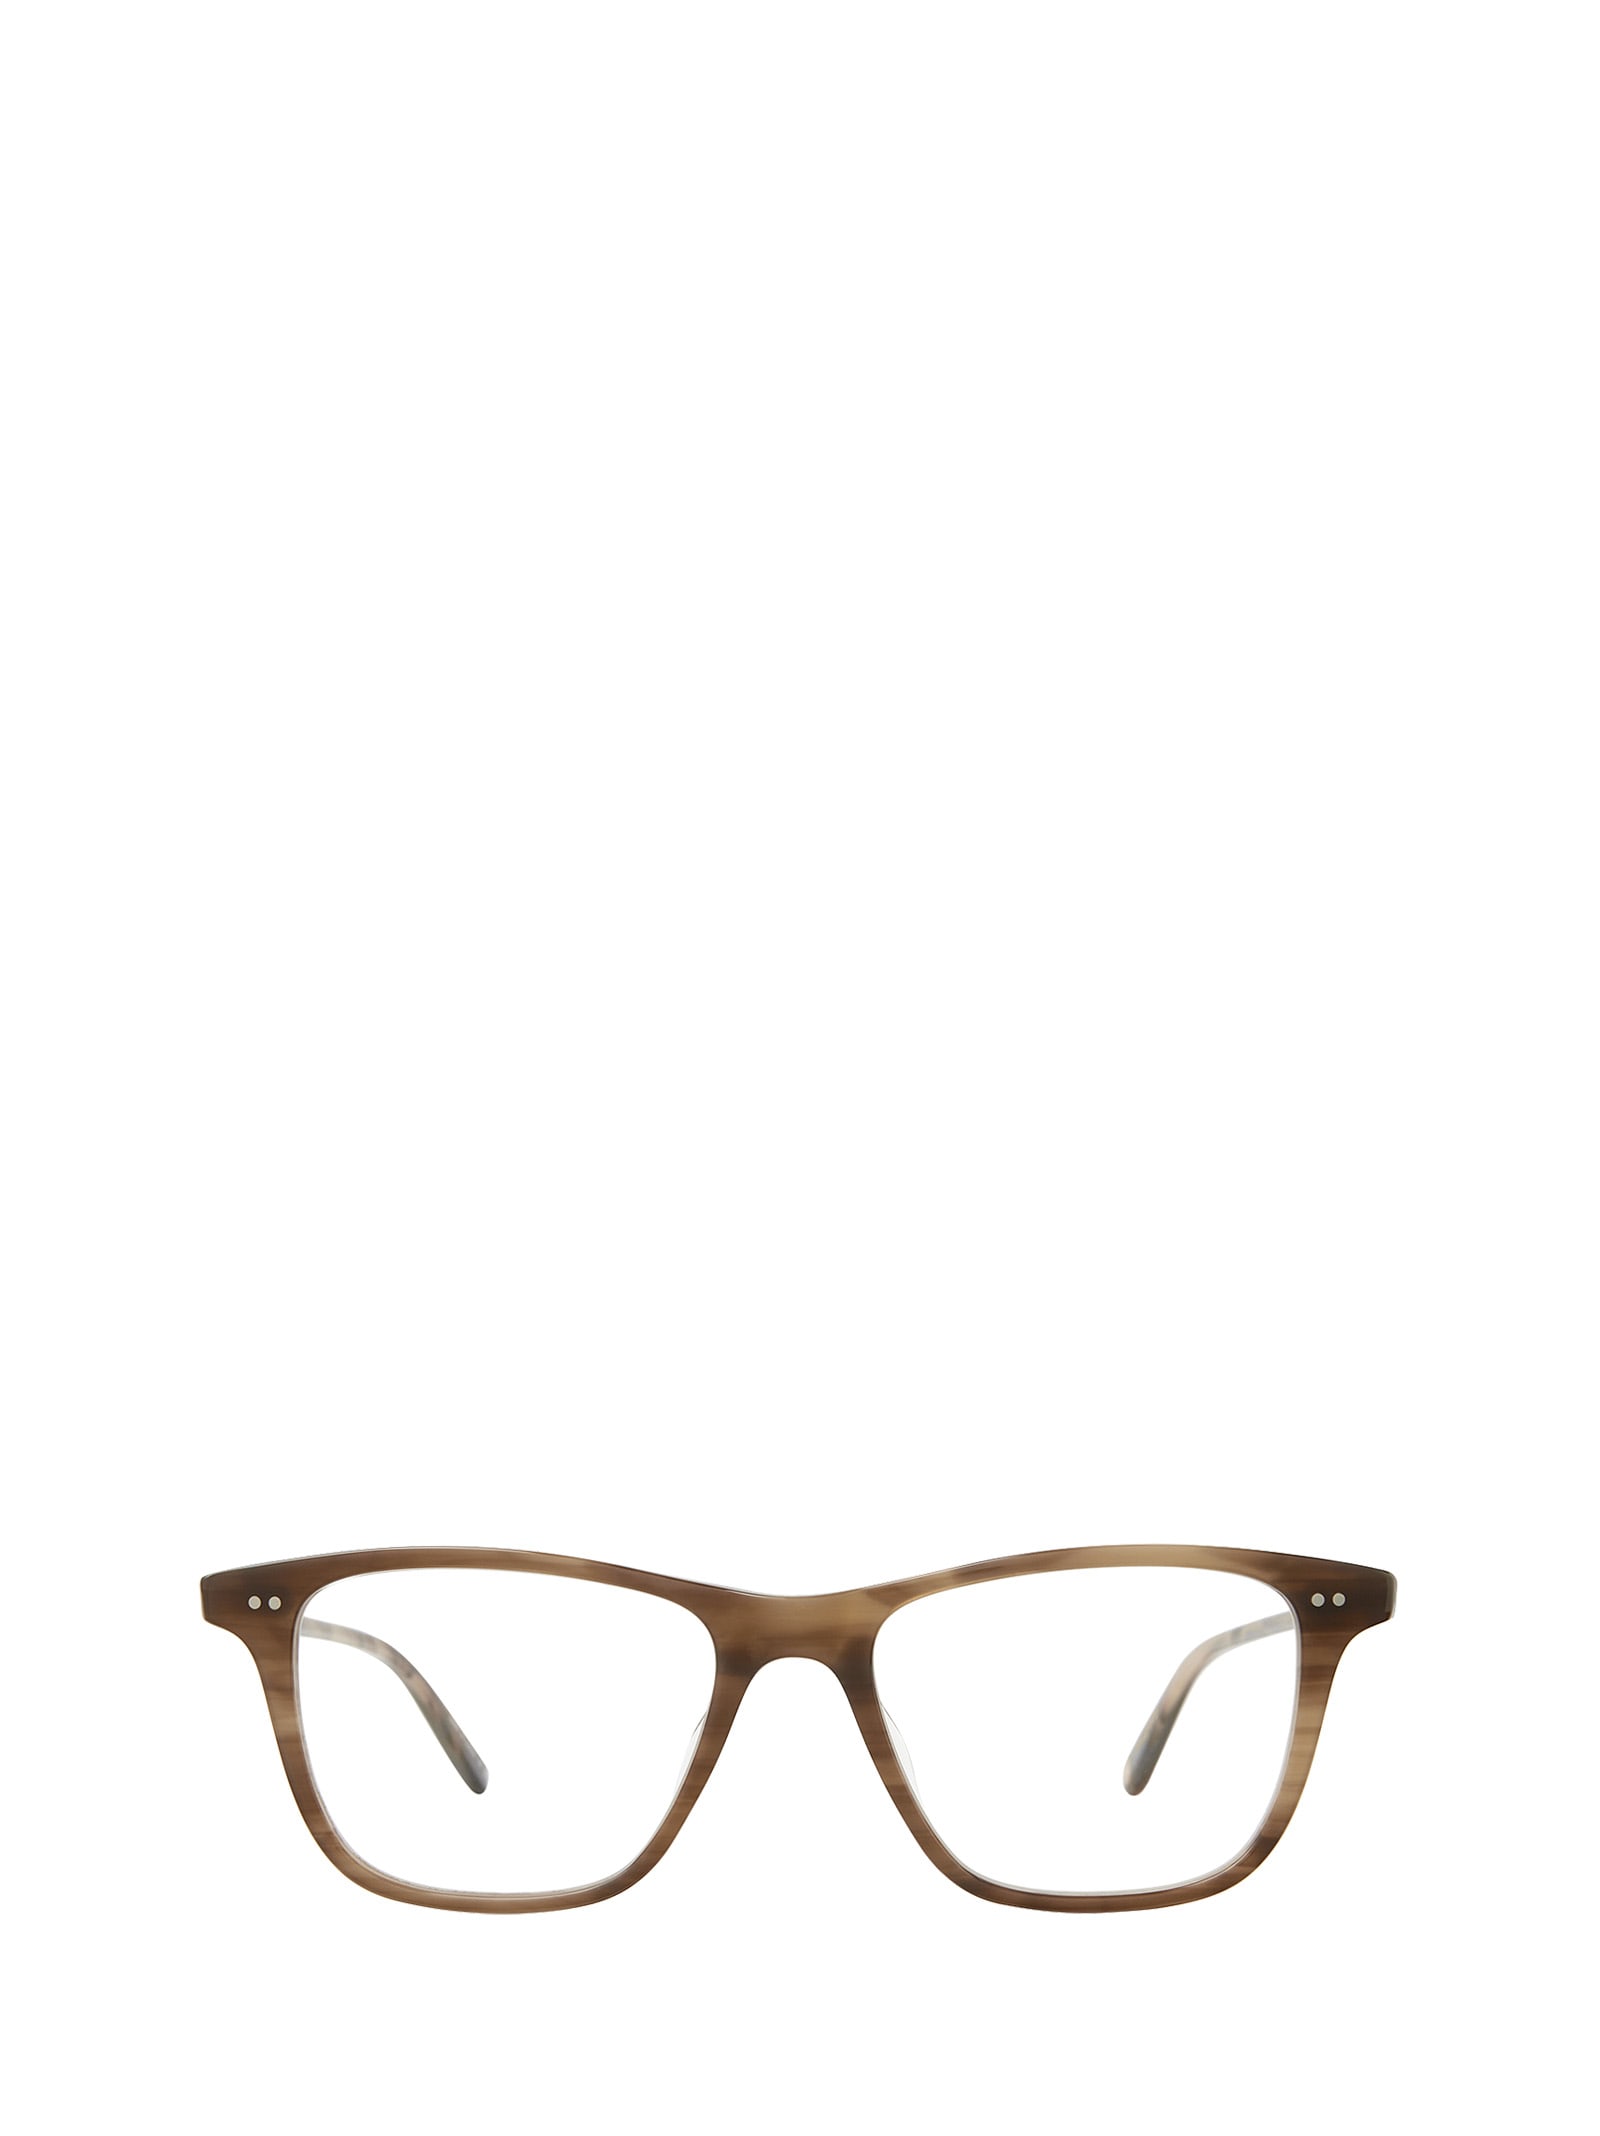 Garrett Leight Hayes Malibu Tortoise Glasses